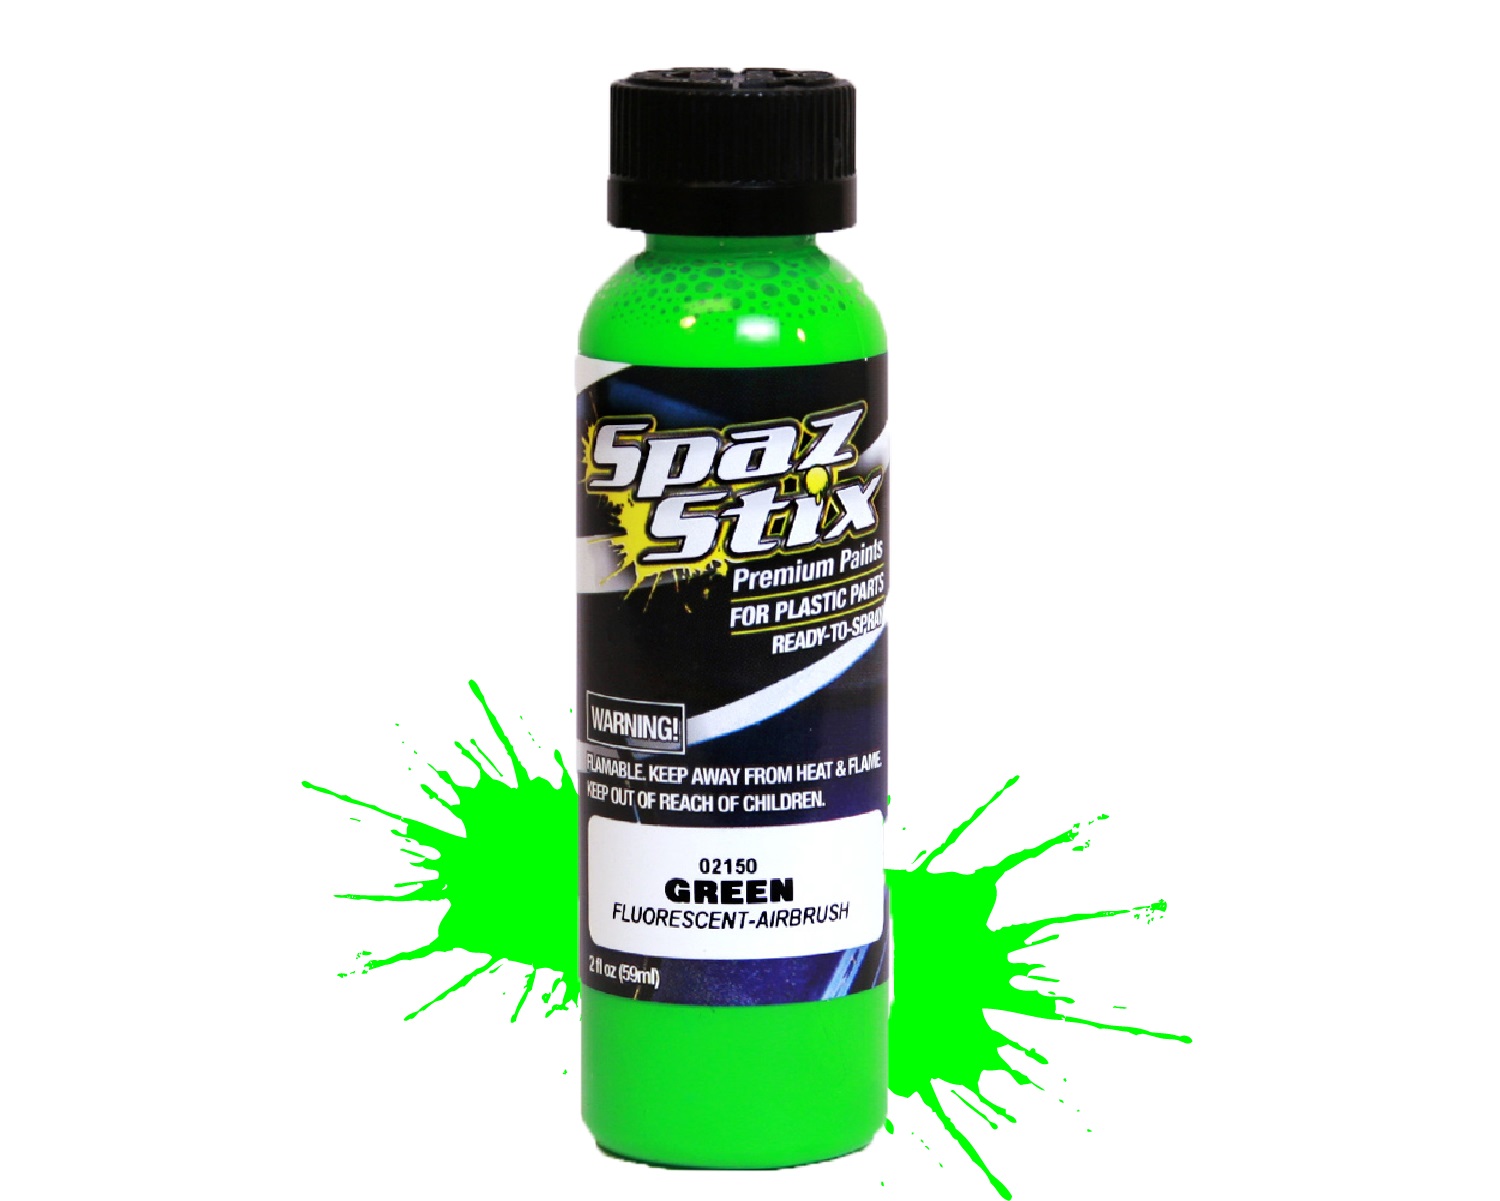 Spax Stix Green Fluorescent White Backer Combo Airbrush Paint SZX00200  SZX02150 - Rotor Ron